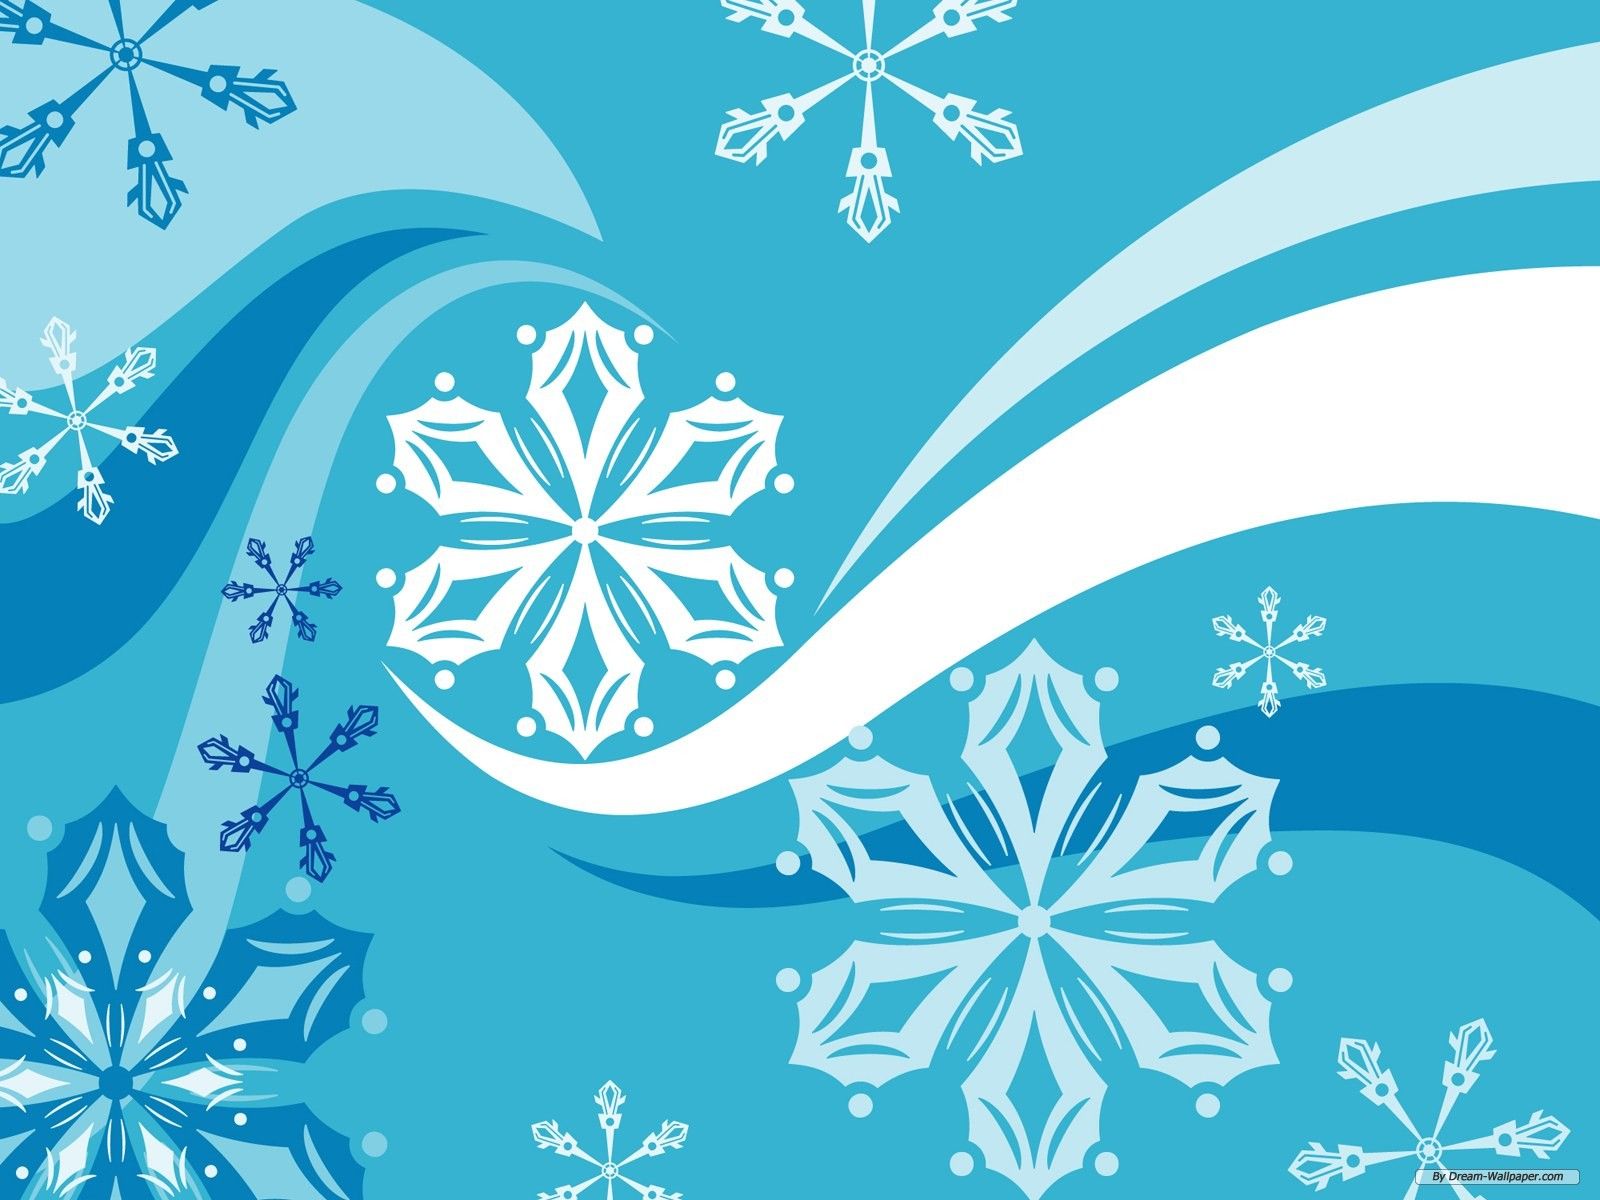 Free Wallpaper - Free Art wallpaper - Snowflake Vector wallpaper ...